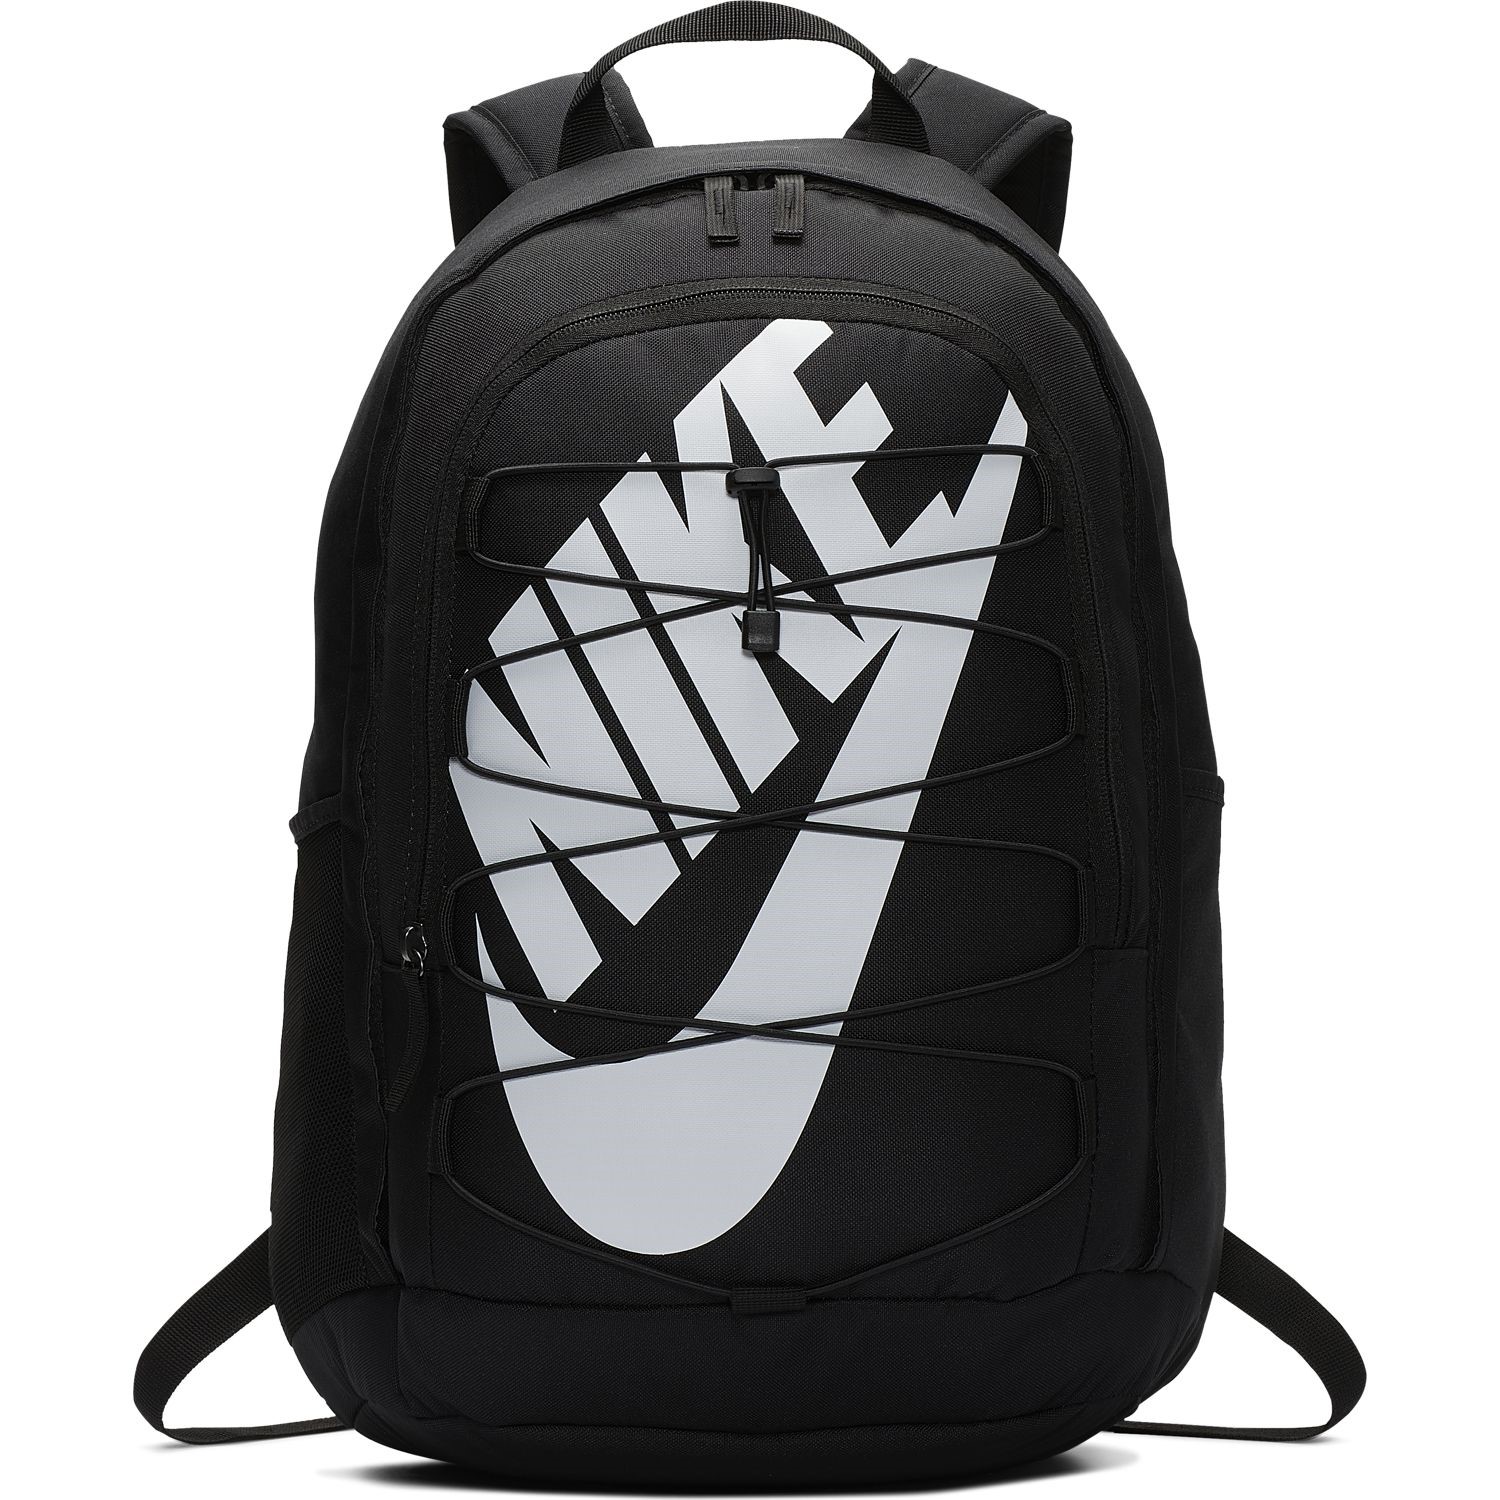 Nike Hayward Training Backpack Bag 2.0 - Black/White | Sportitude